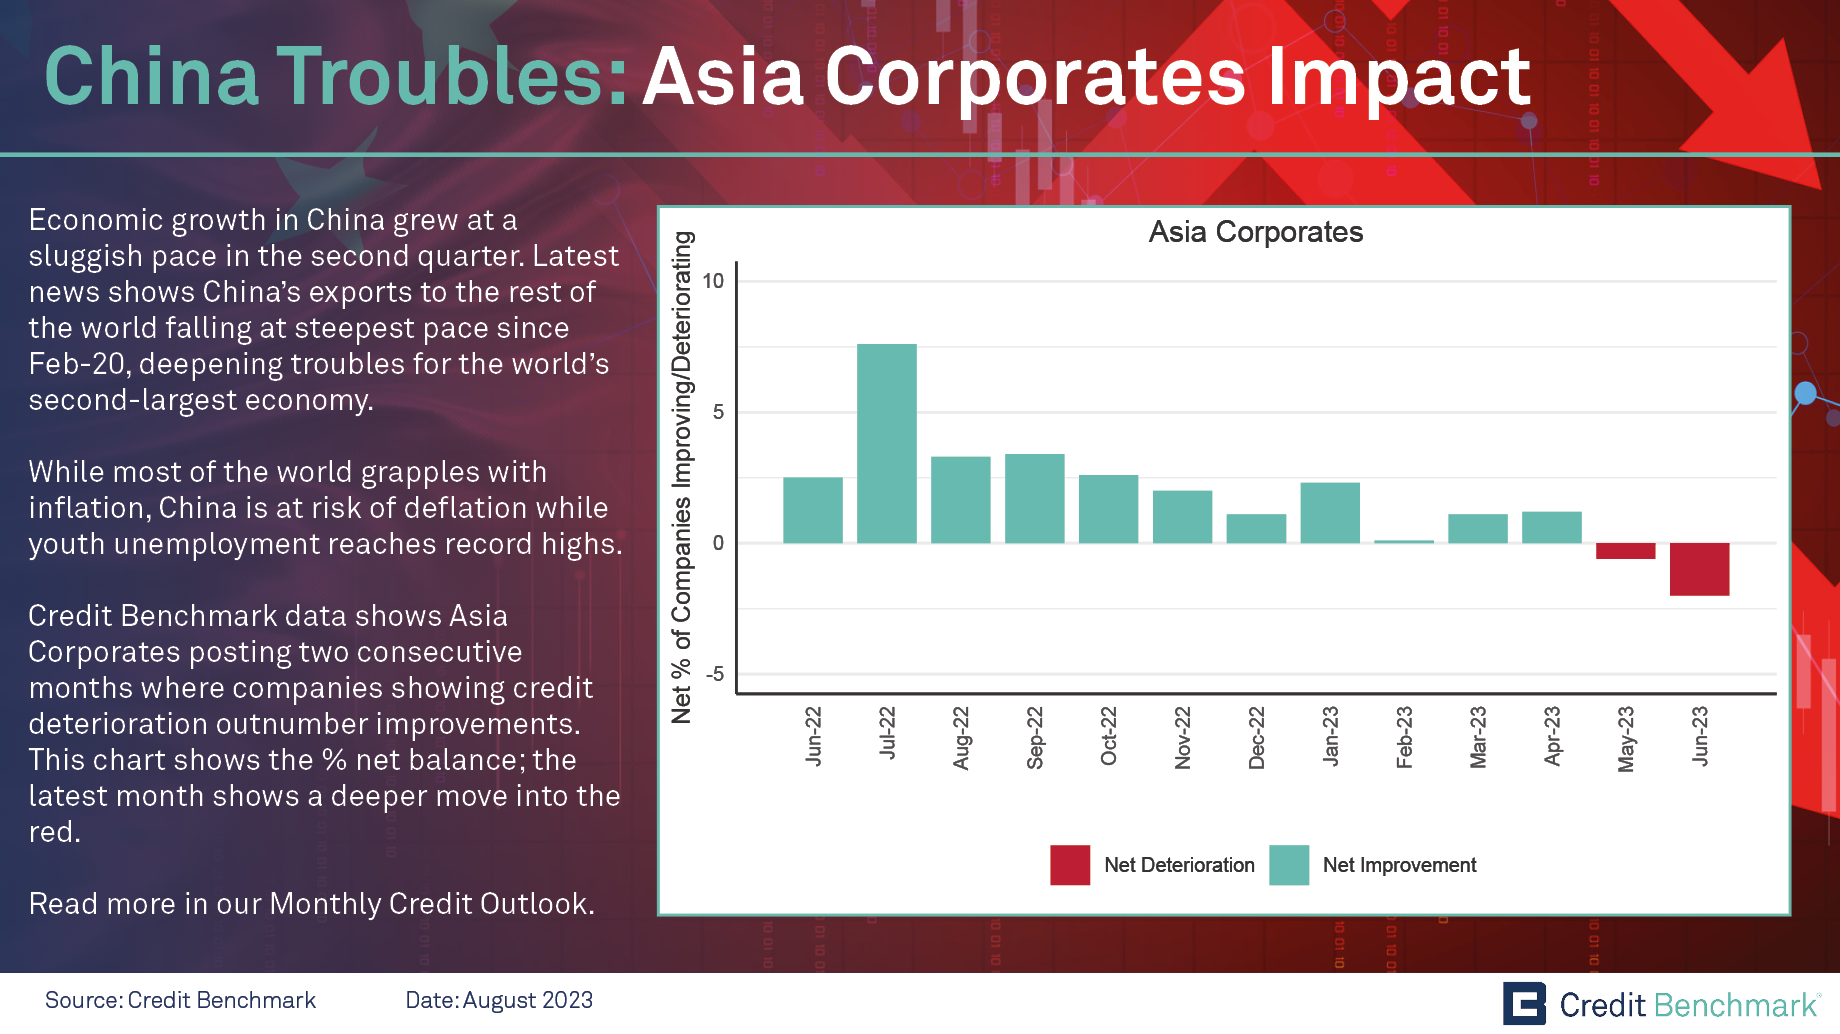 China Troubles: Asia Corporates Impact